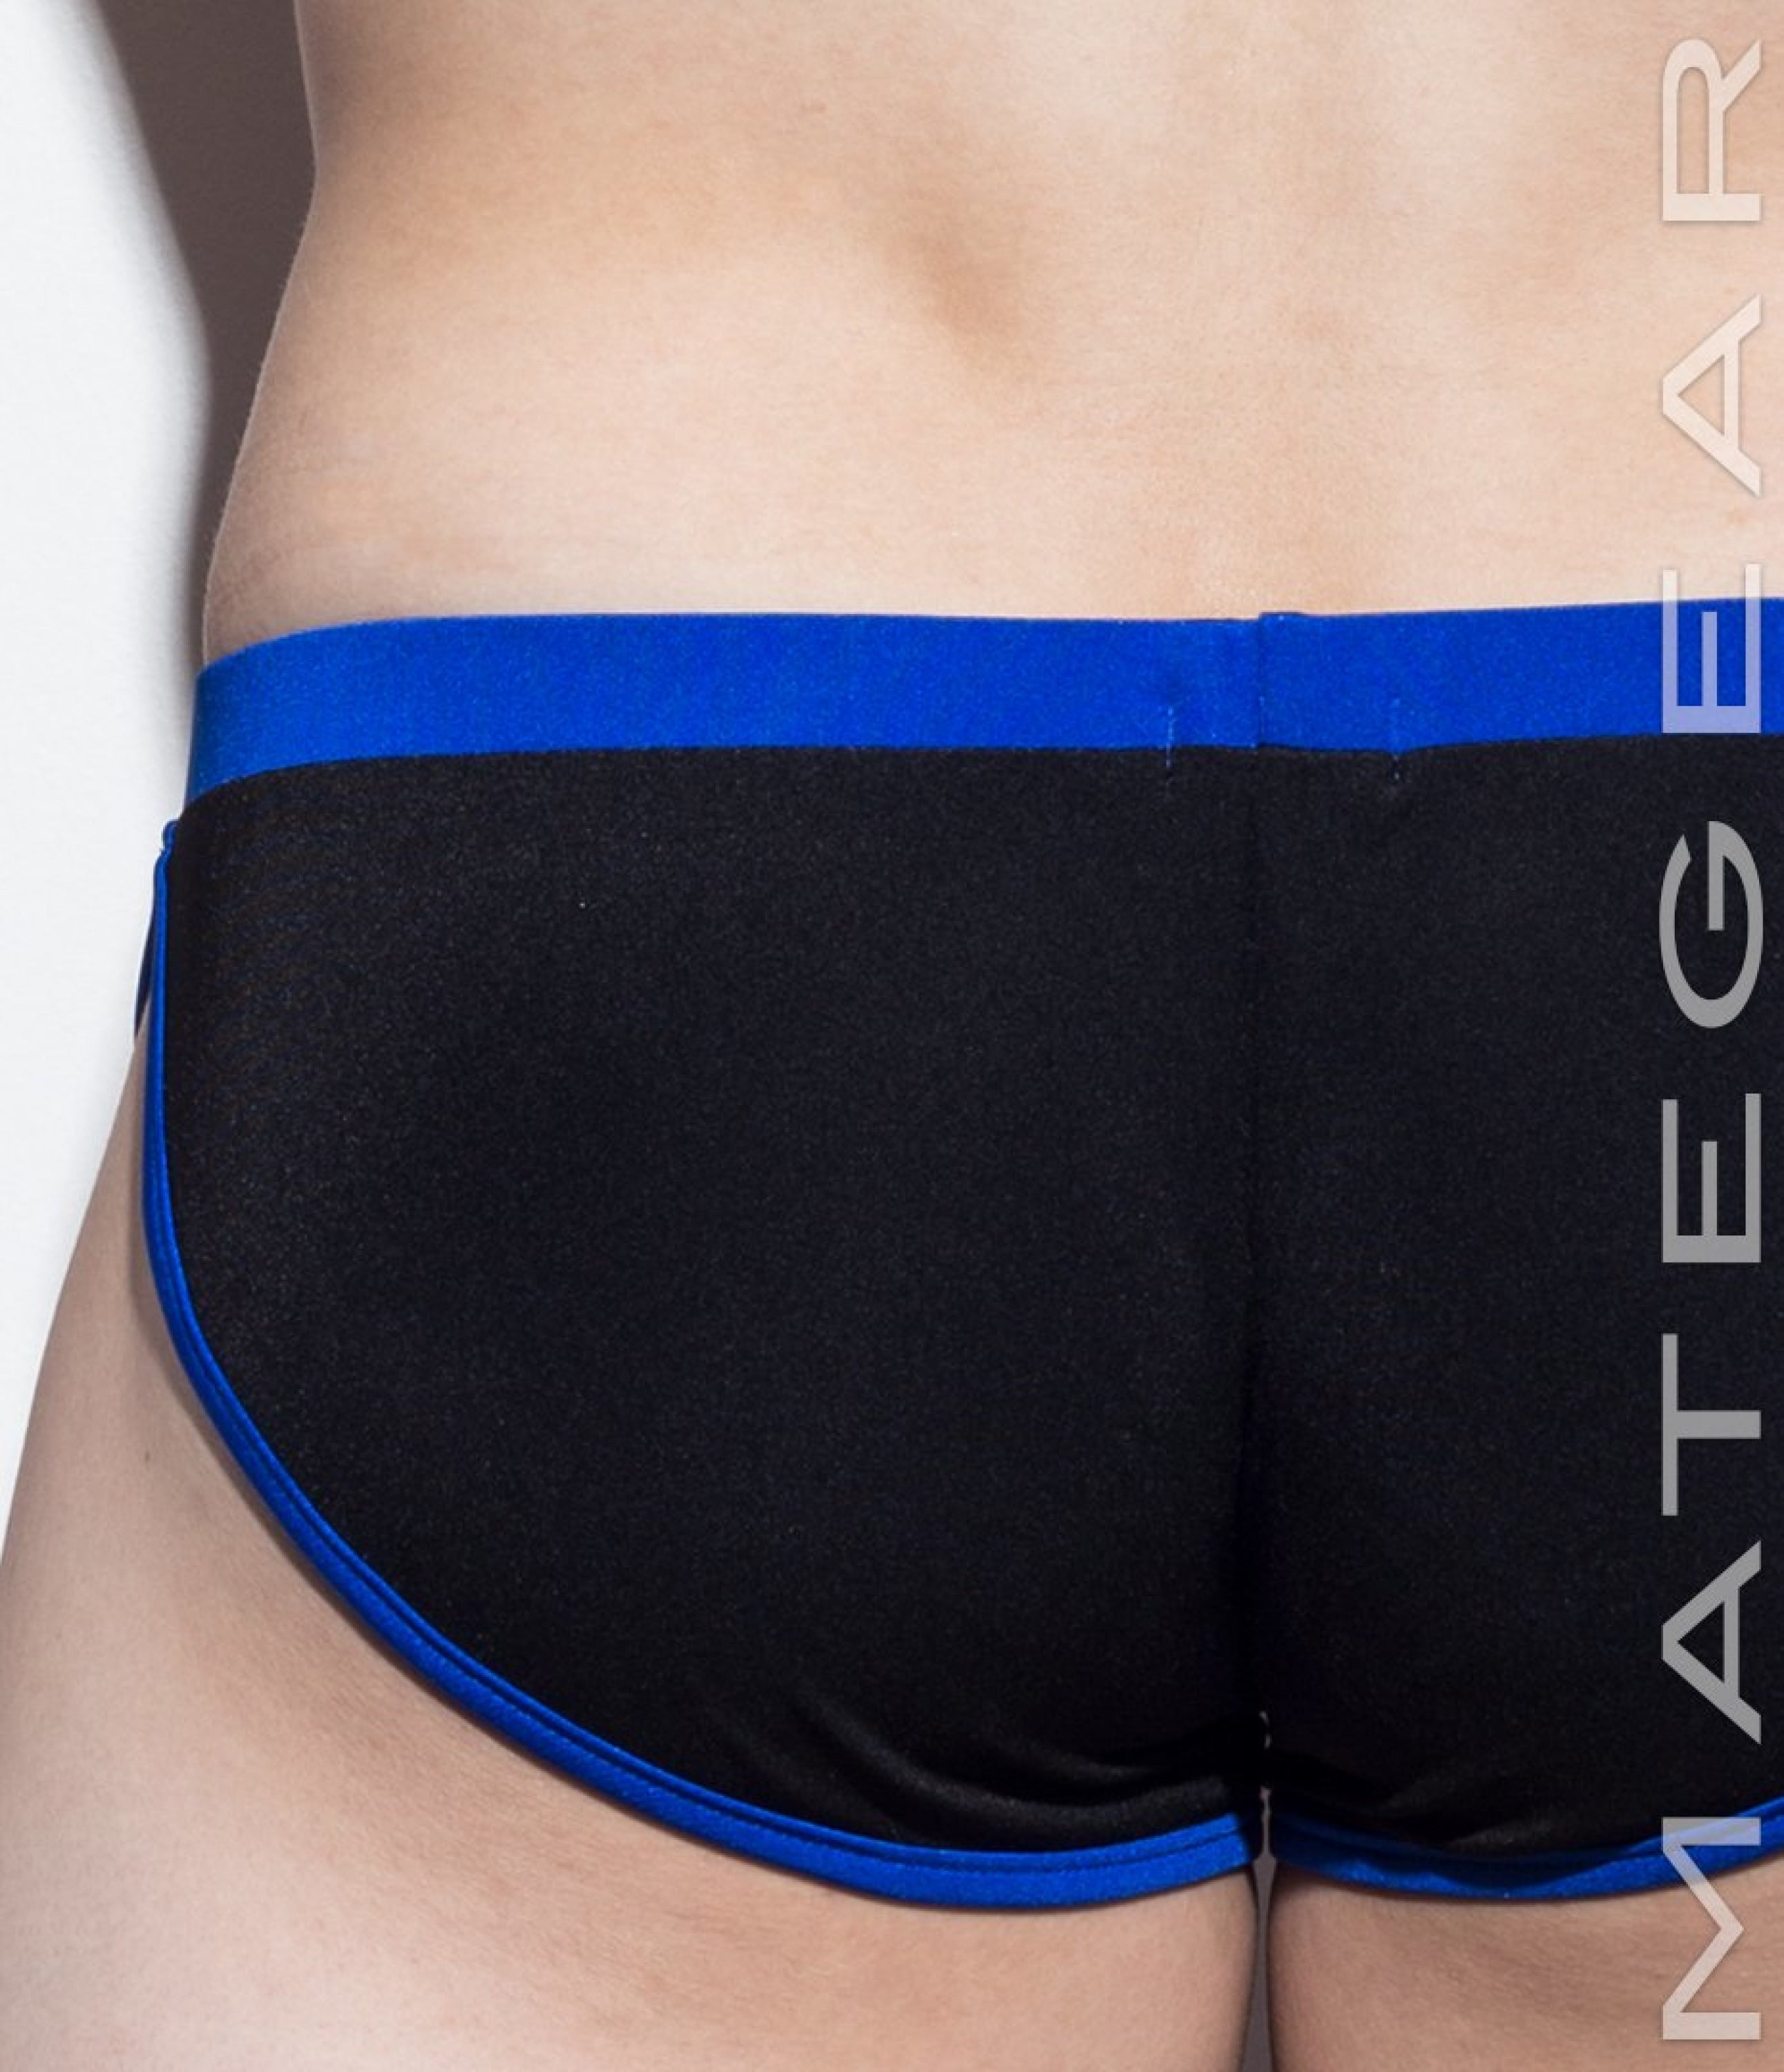 Extremely Sexy Mini Shorts - Nae Chul (Sports Series) - MATEGEAR - Sexy Men's Swimwear, Underwear, Sportswear and Loungewear